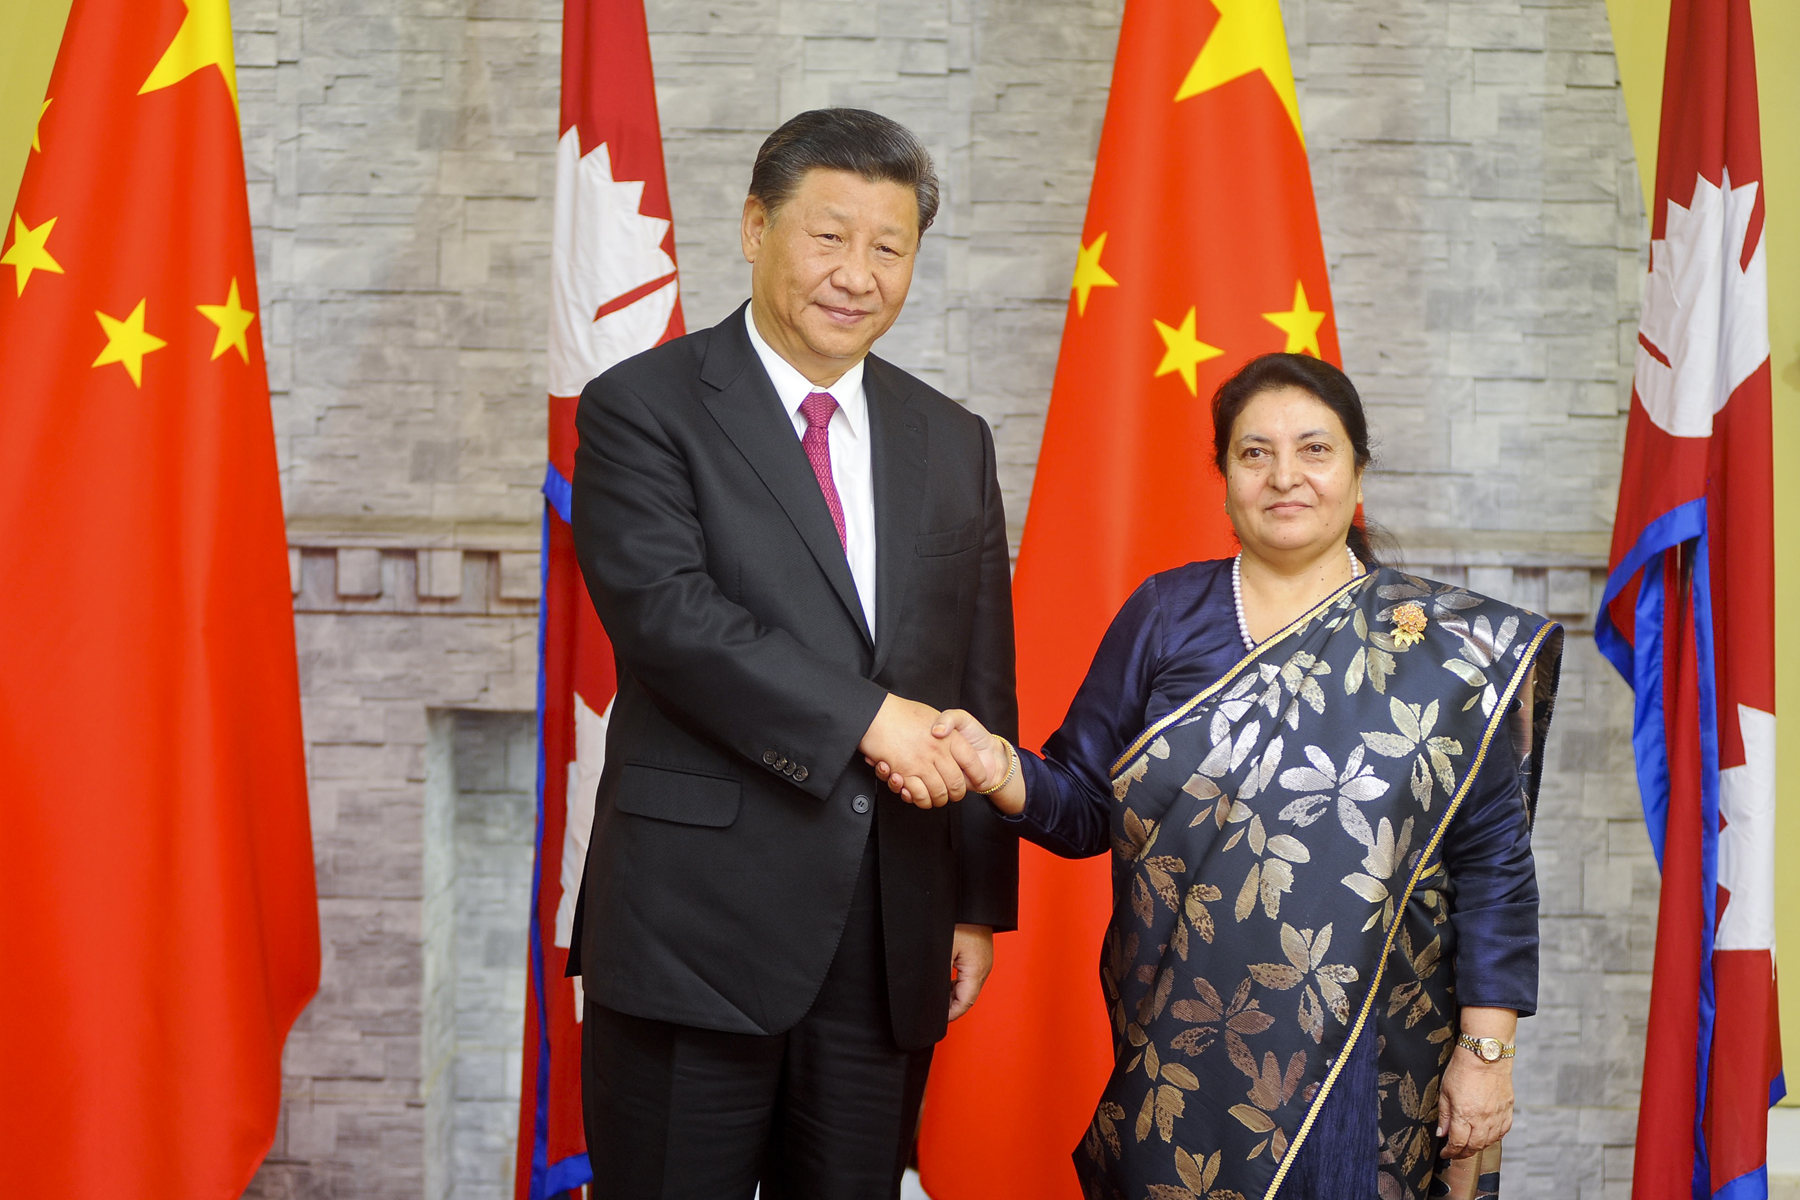 Xi says ready to bolster China-Nepal ties